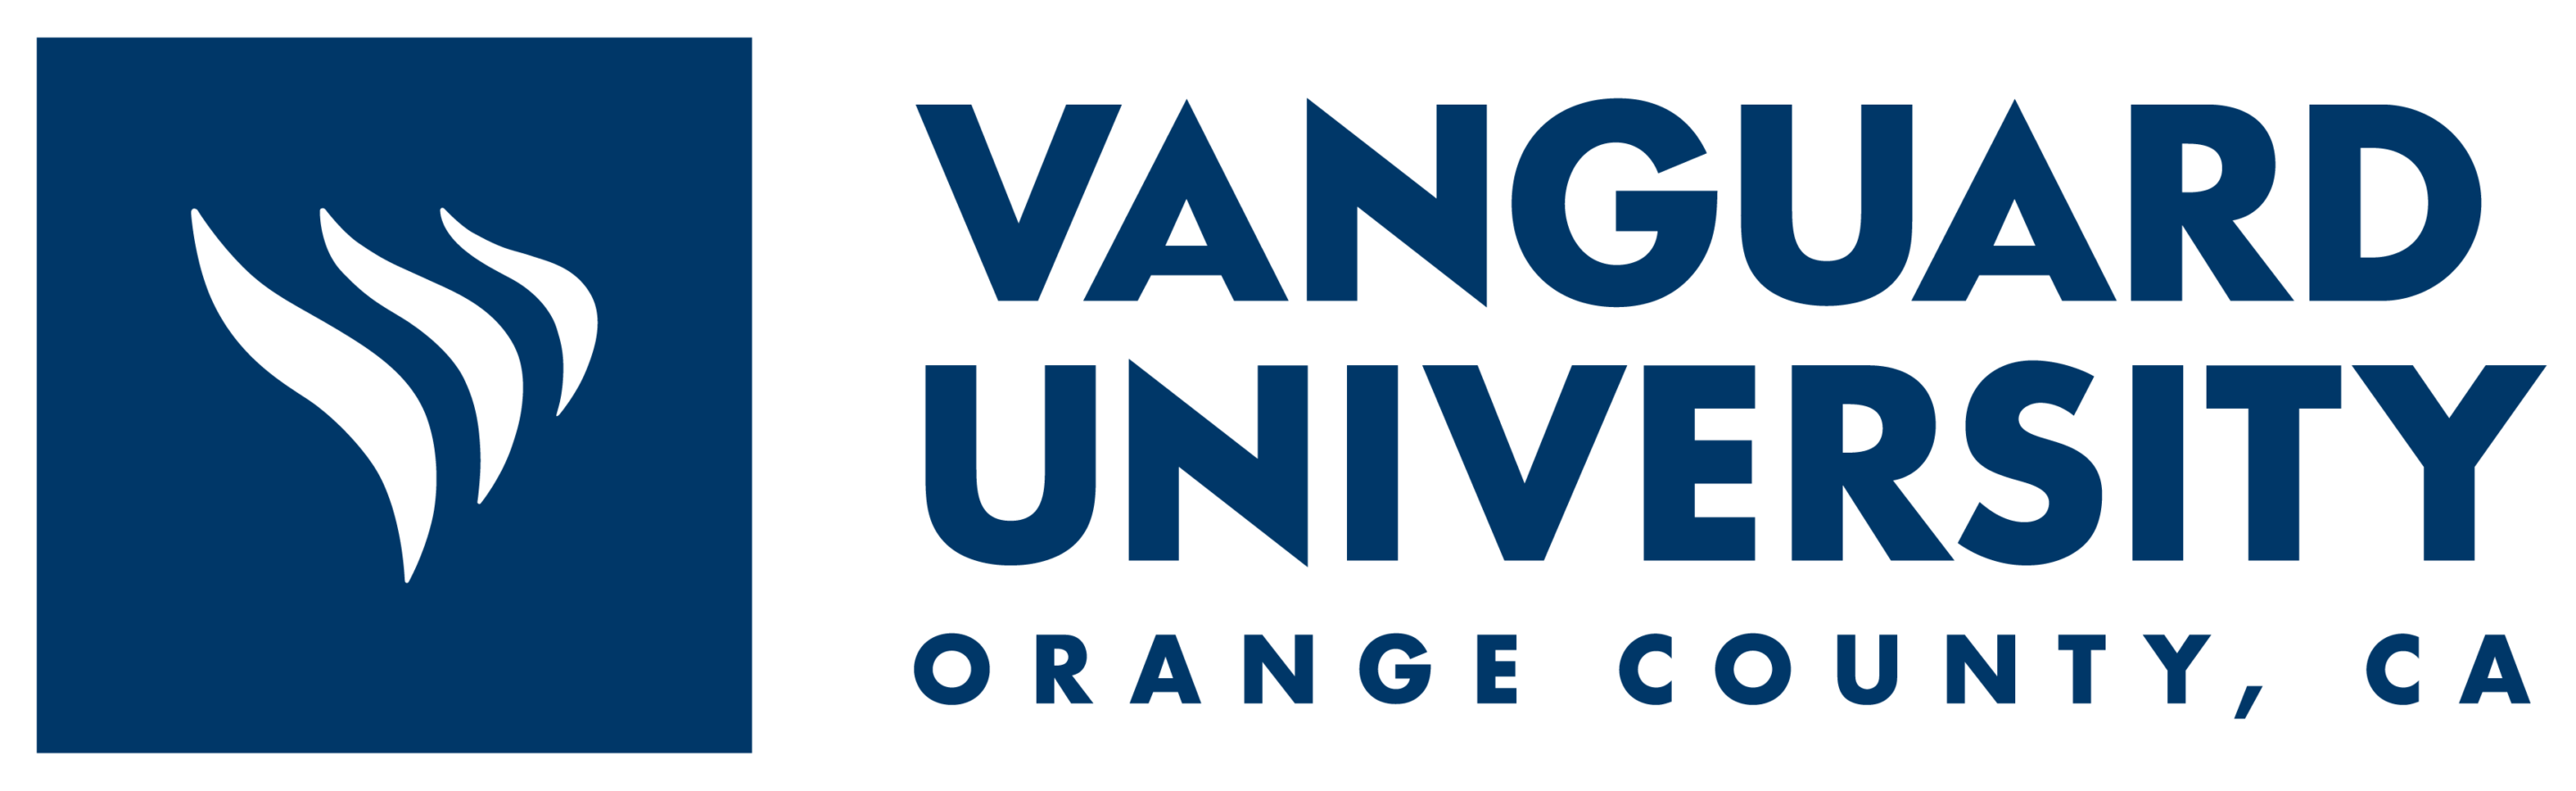 Vanguard Univ